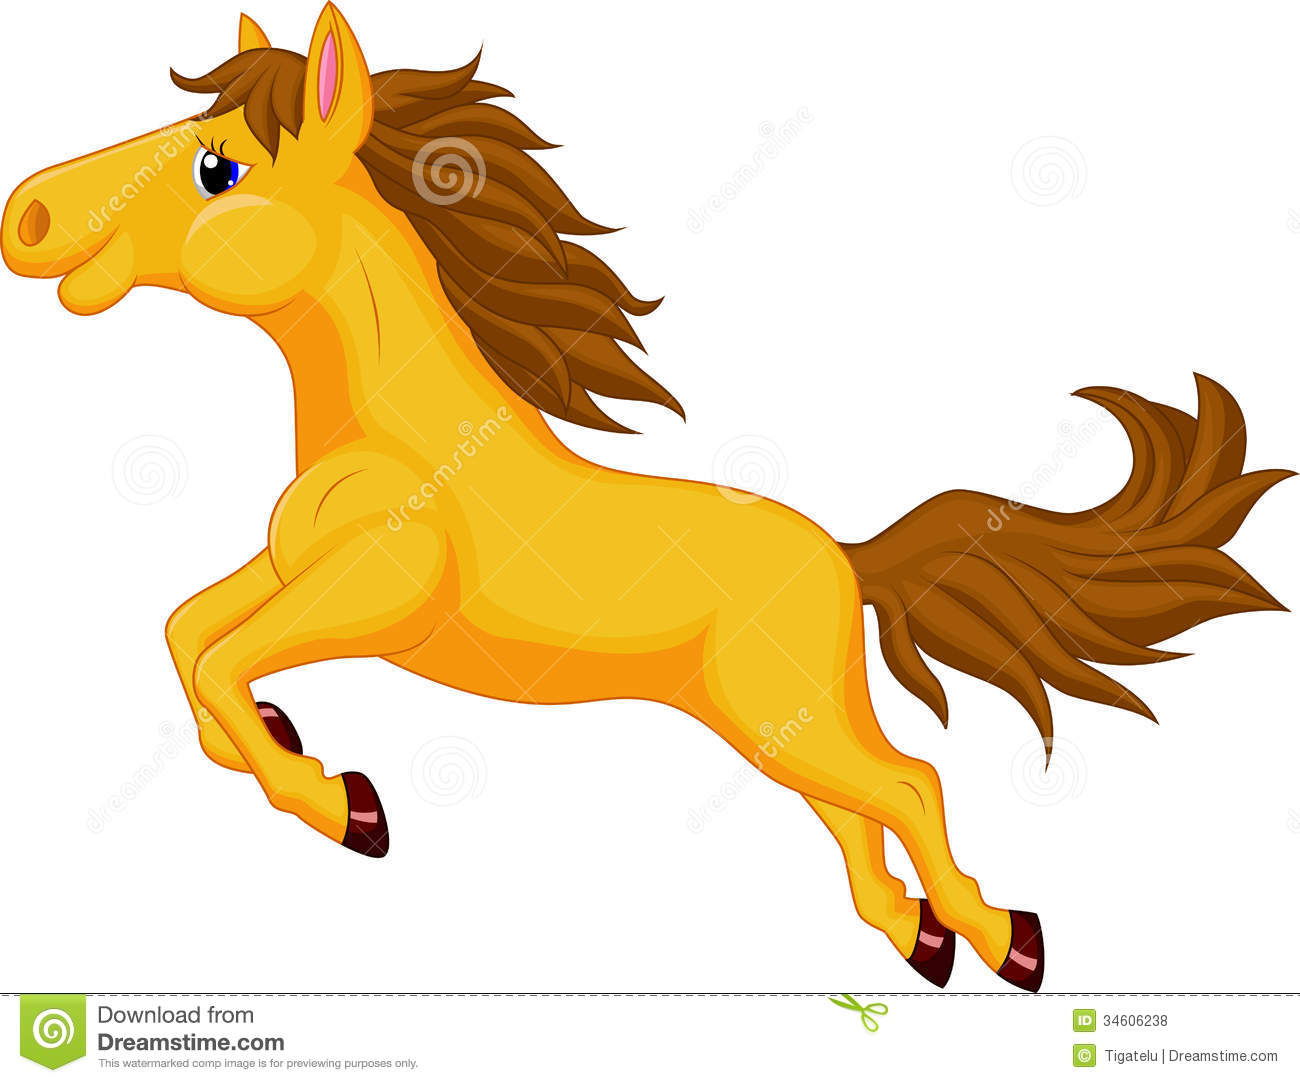 Horse Cartoon Jumping Royalty Free Stock Photos   Image  34606238